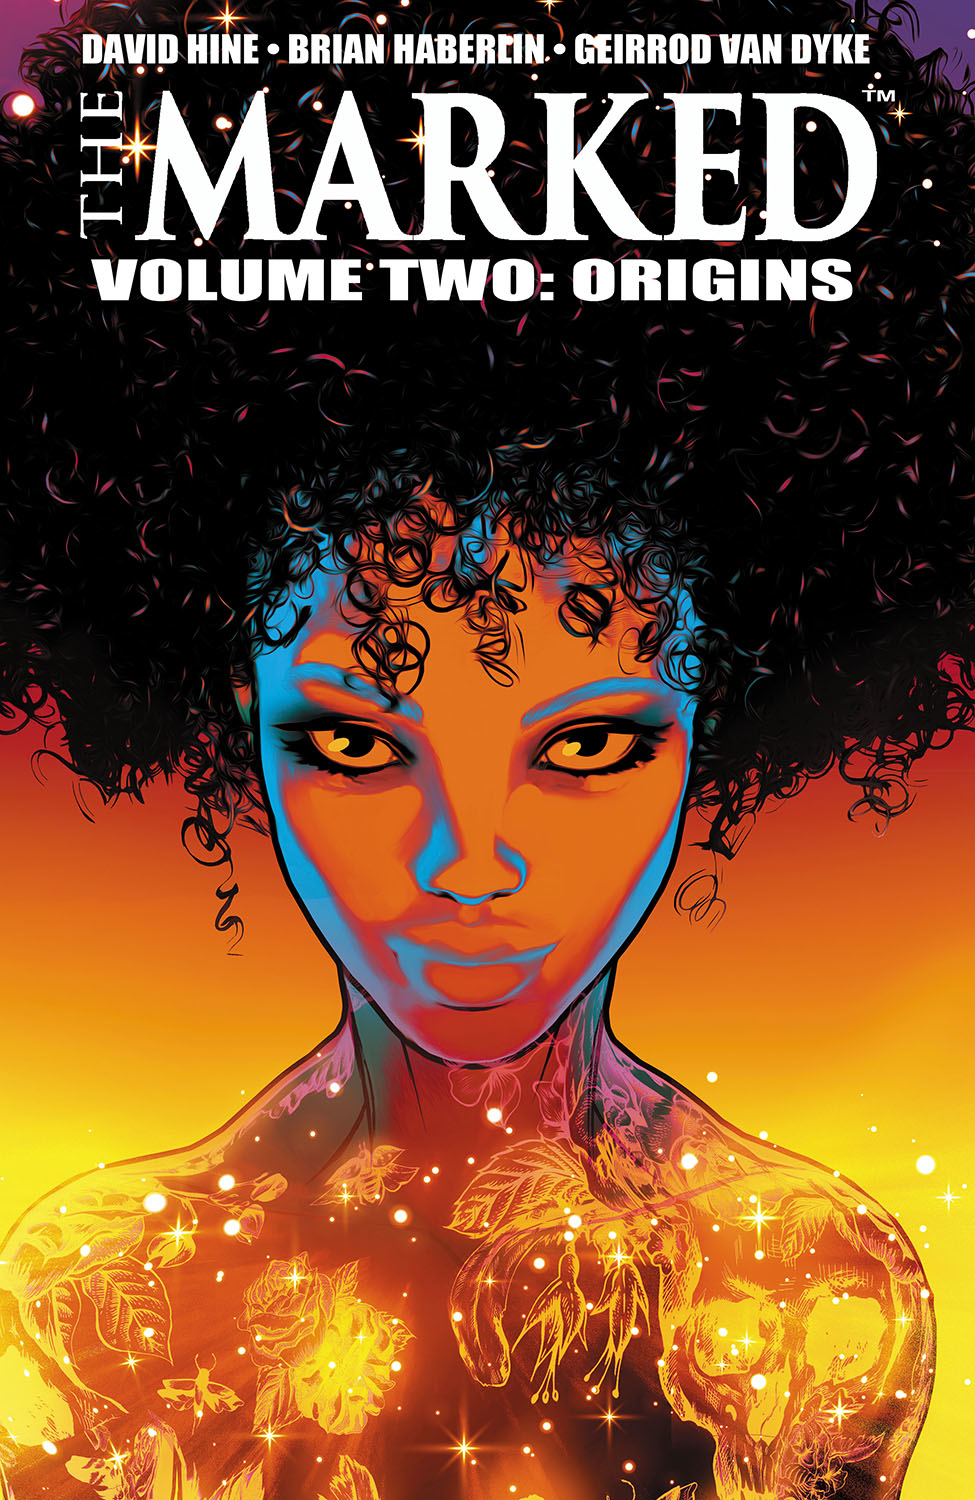 Marked Graphic Novel Volume 2 Origins (Mature)